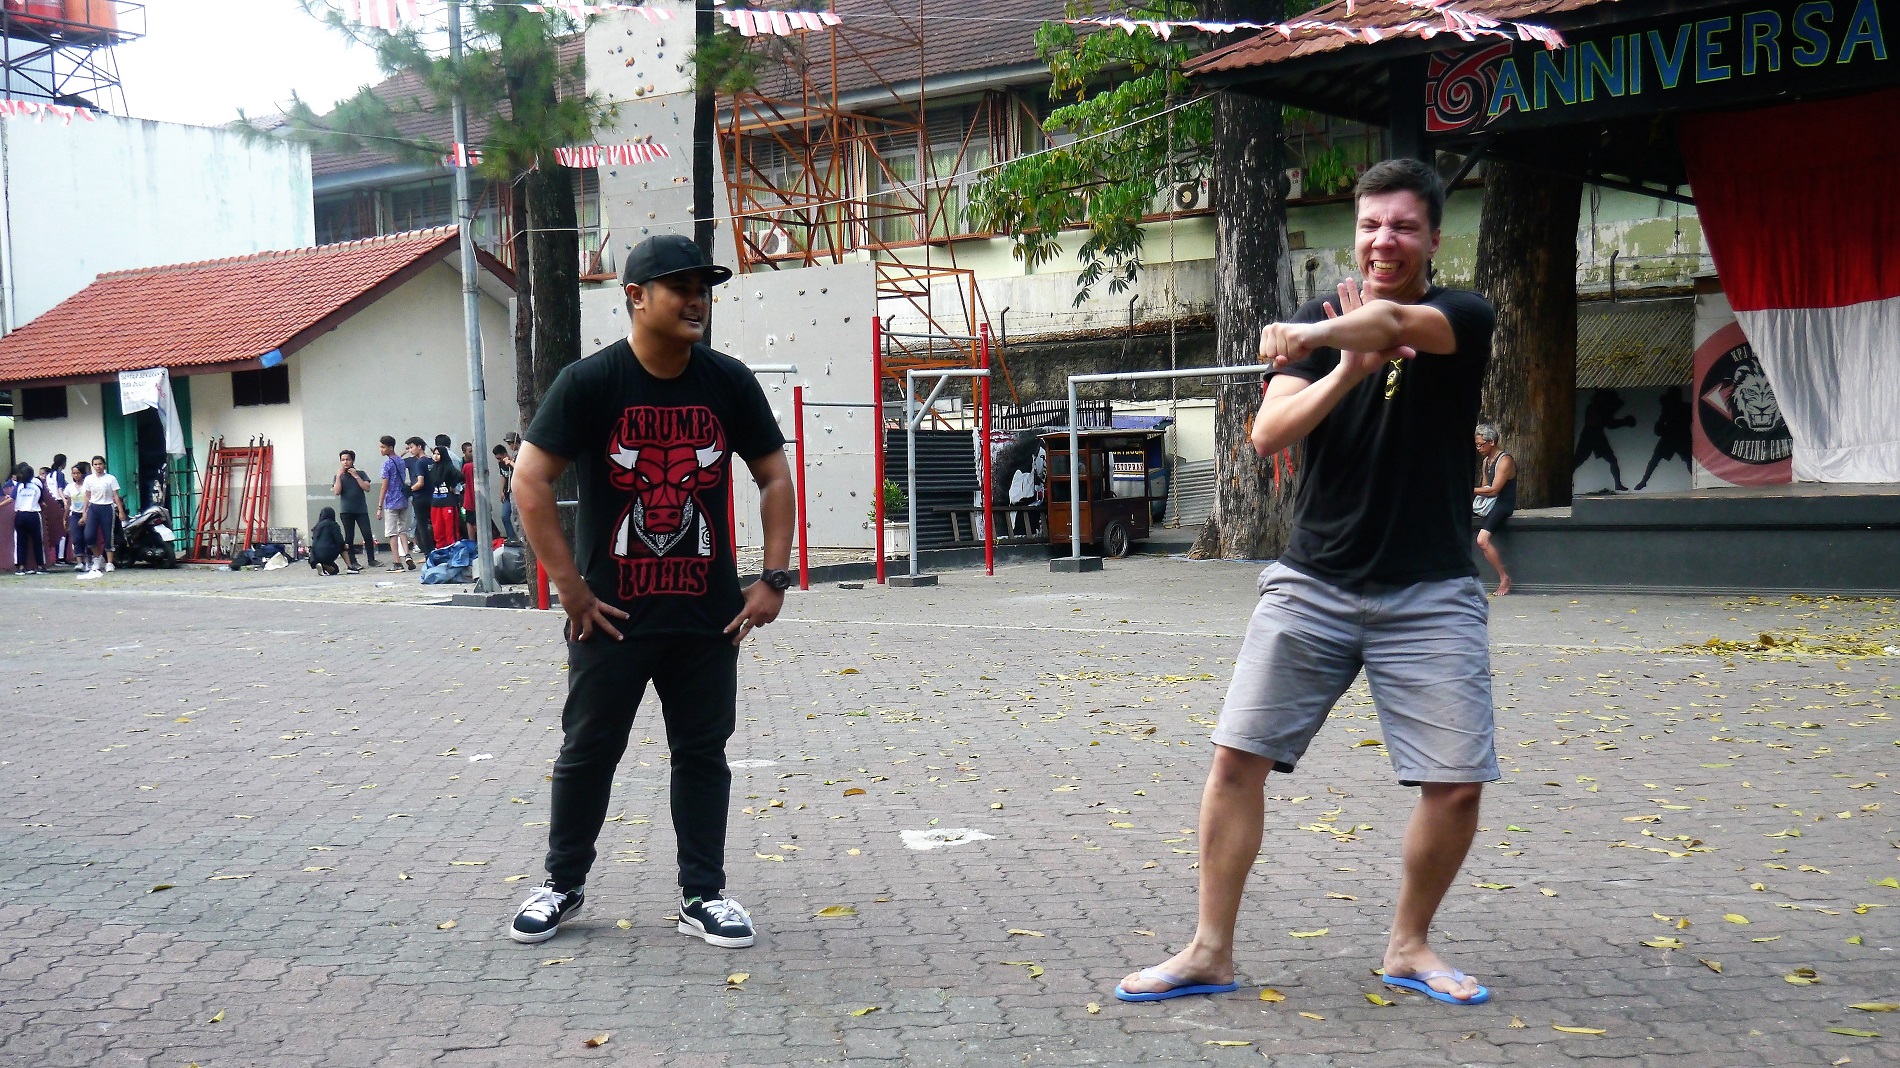 Krump in Jakarta Indonesia dancing on the street